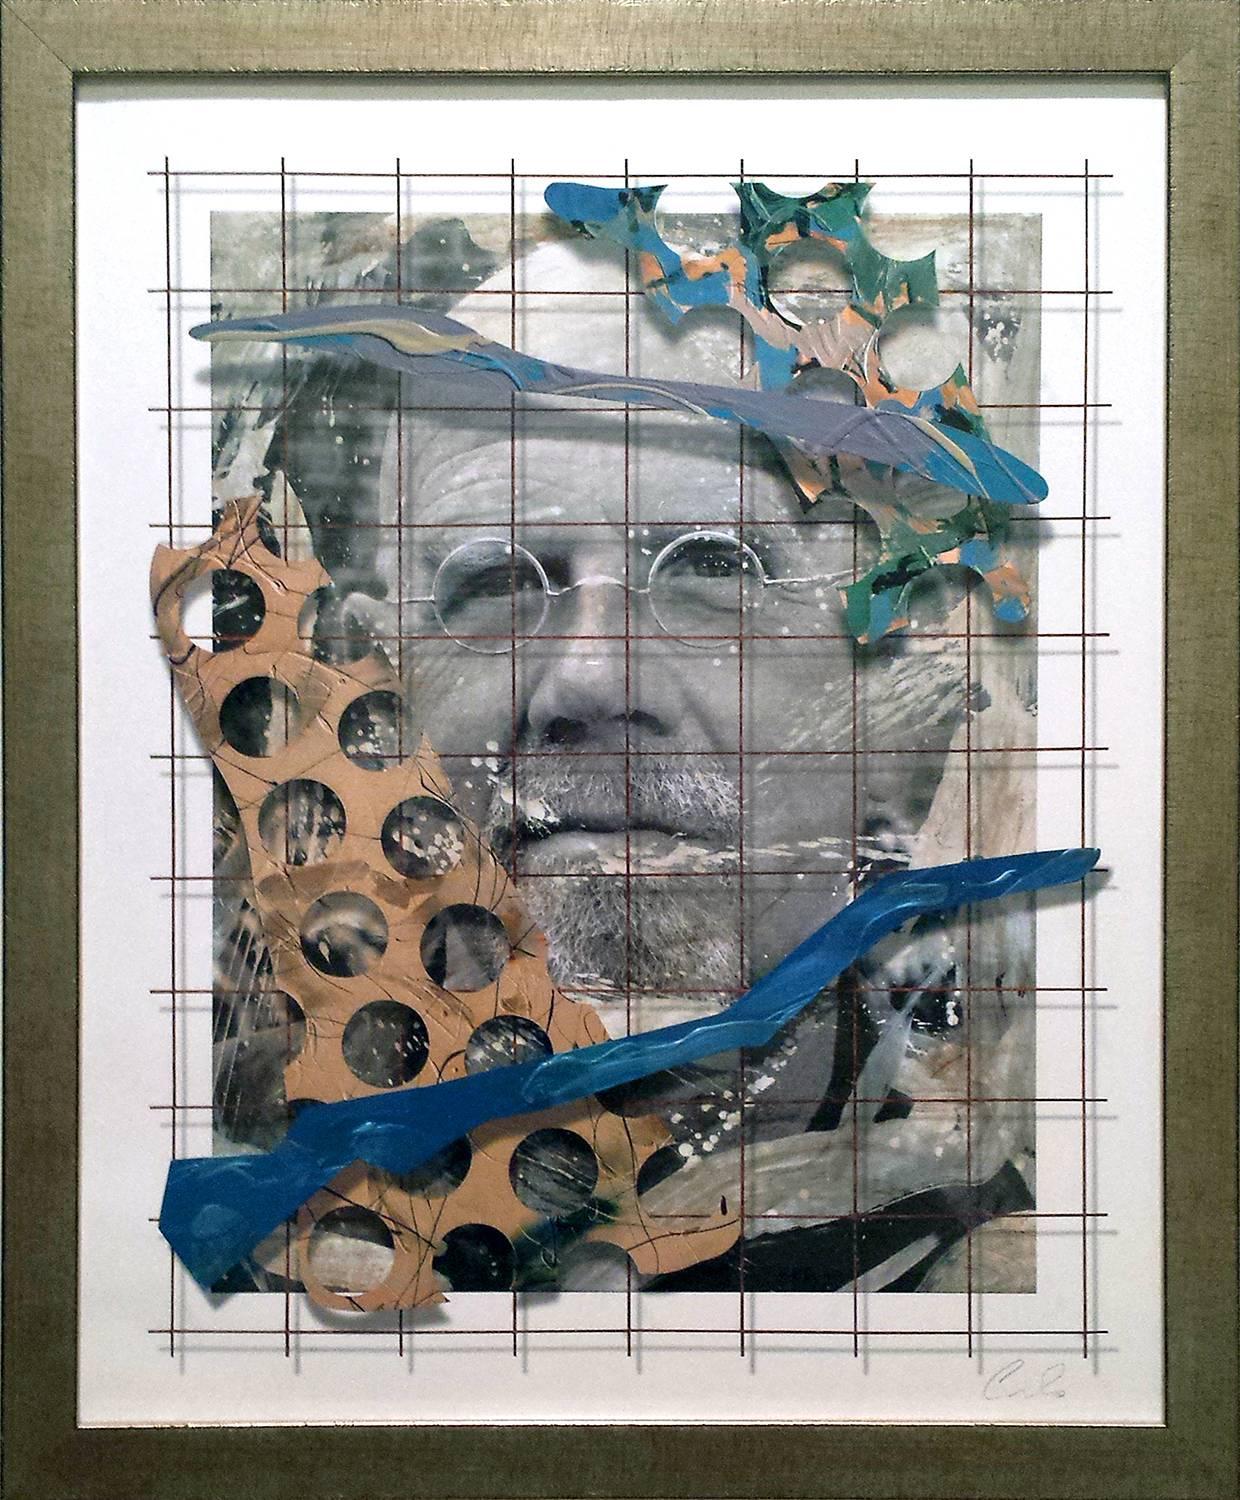 Ceravolo Portrait Photograph – "Chuck Close Study for 3D Painting" 47x38" einzigartiger archivtauglicher Pigmentdruck